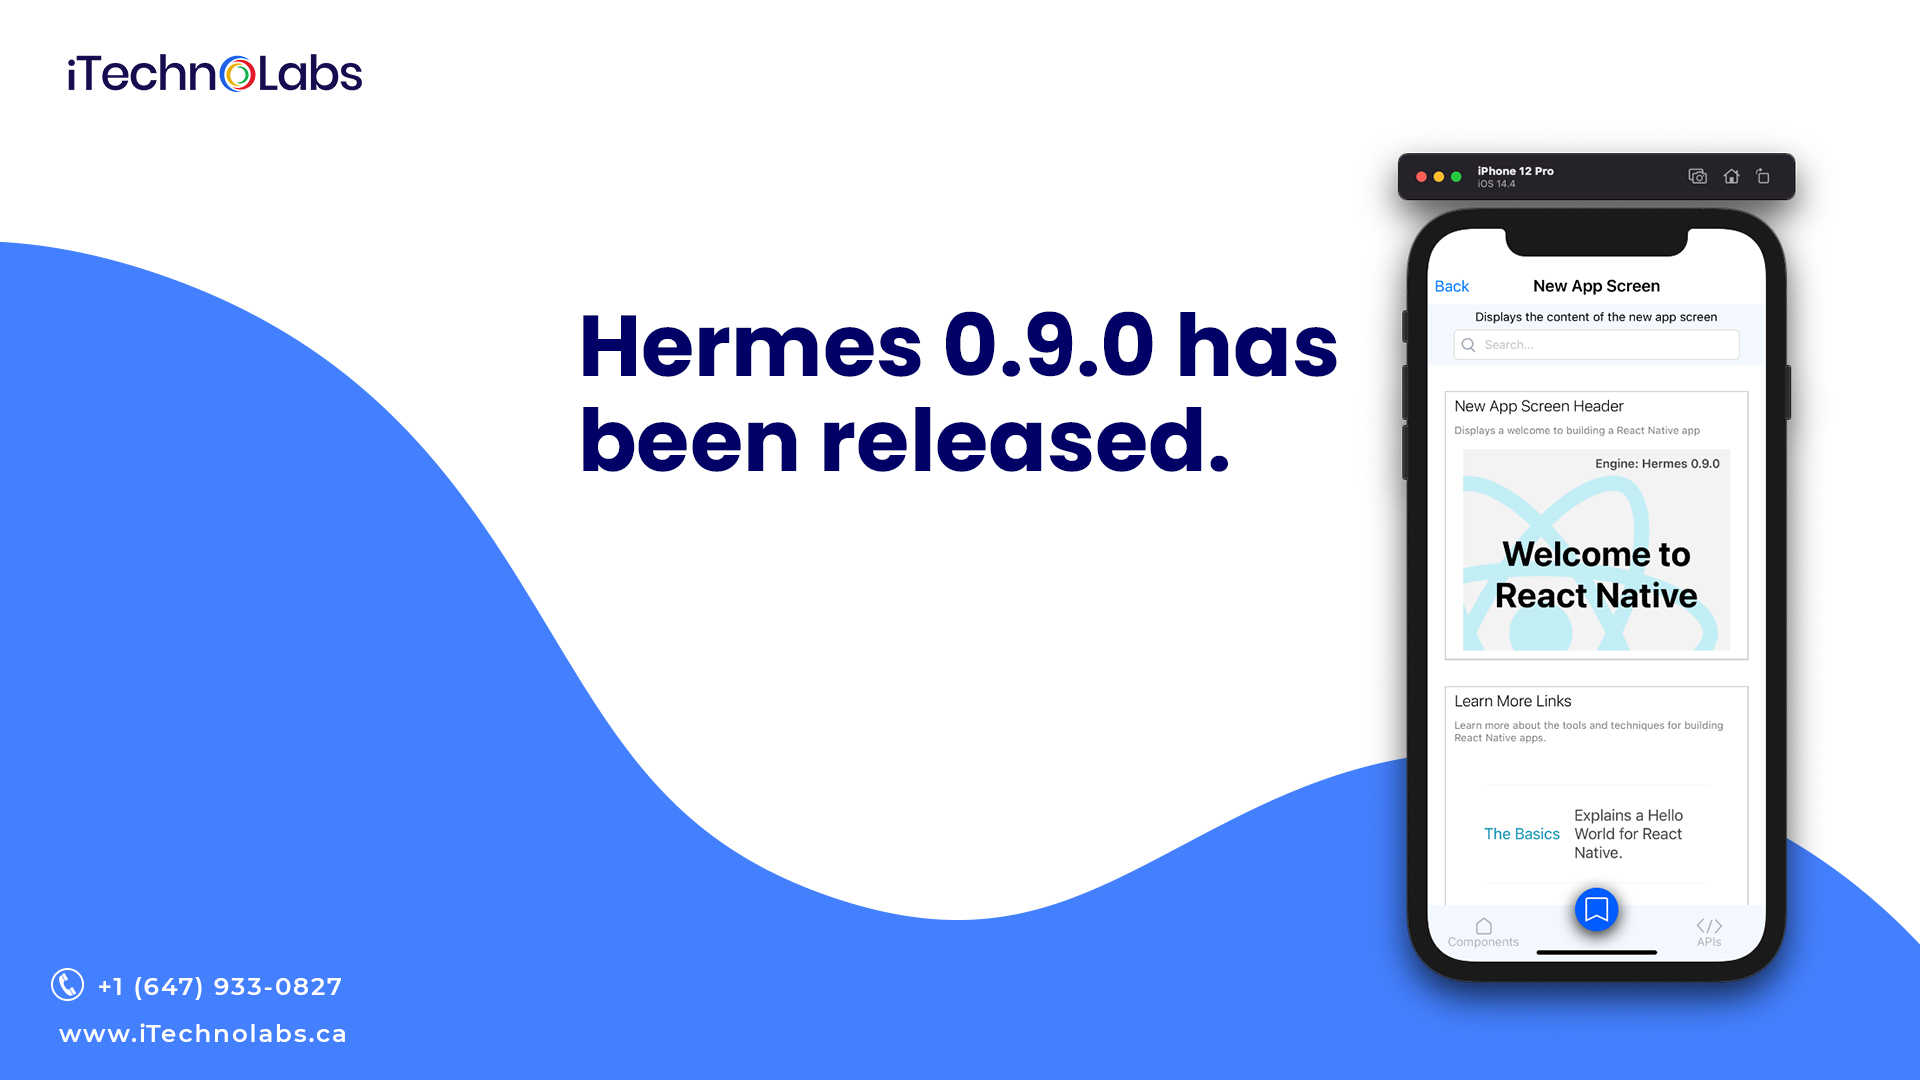 Hermes 0.9.0 has been released itechnolabsHermes 0.9.0 has been released itechnolabs